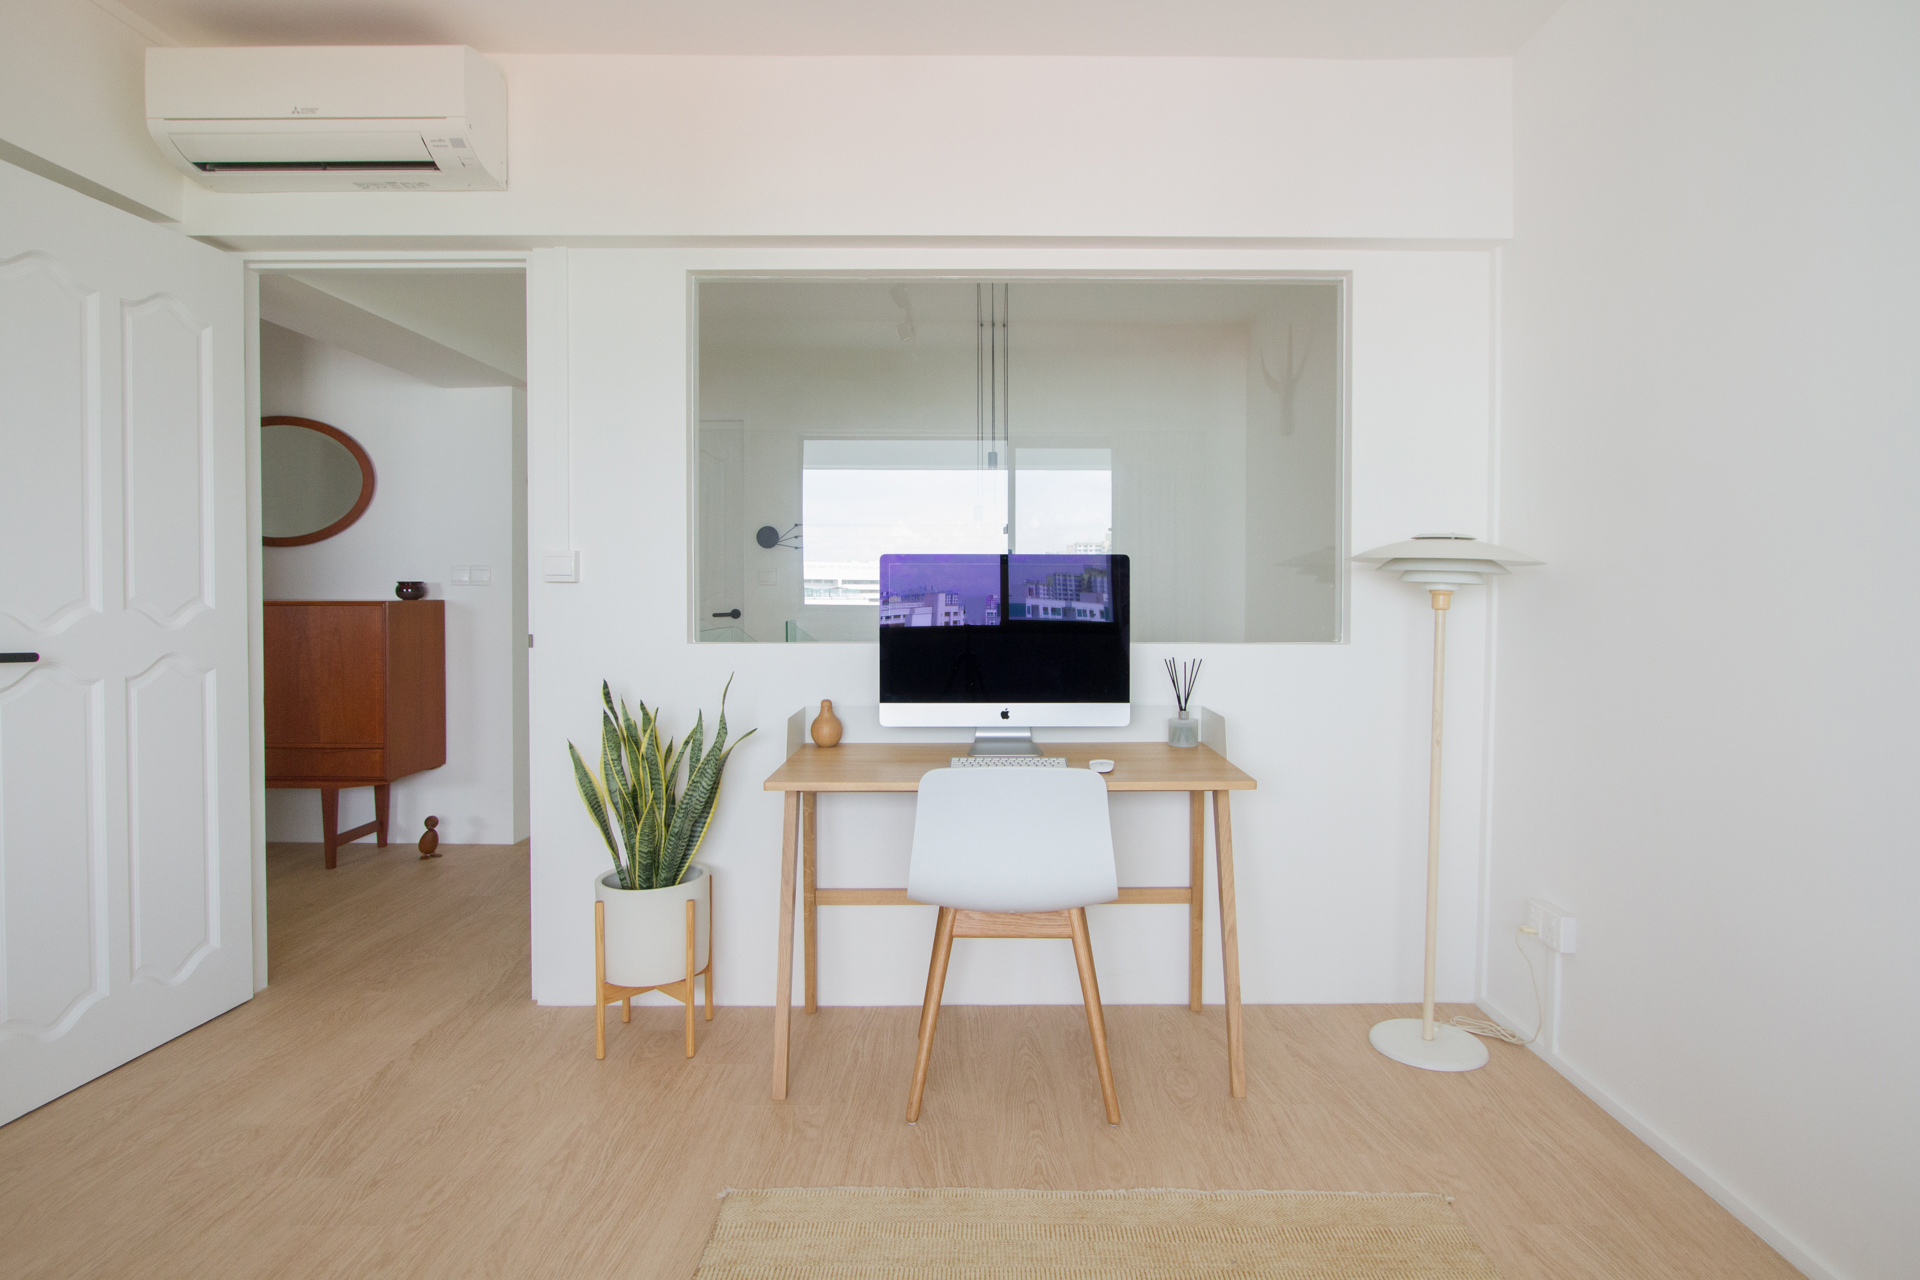 squarerooms-the-merry-men-interiors-office-white-minimalist-scandinavian-bright-plants-tidy-nice-goals-wood